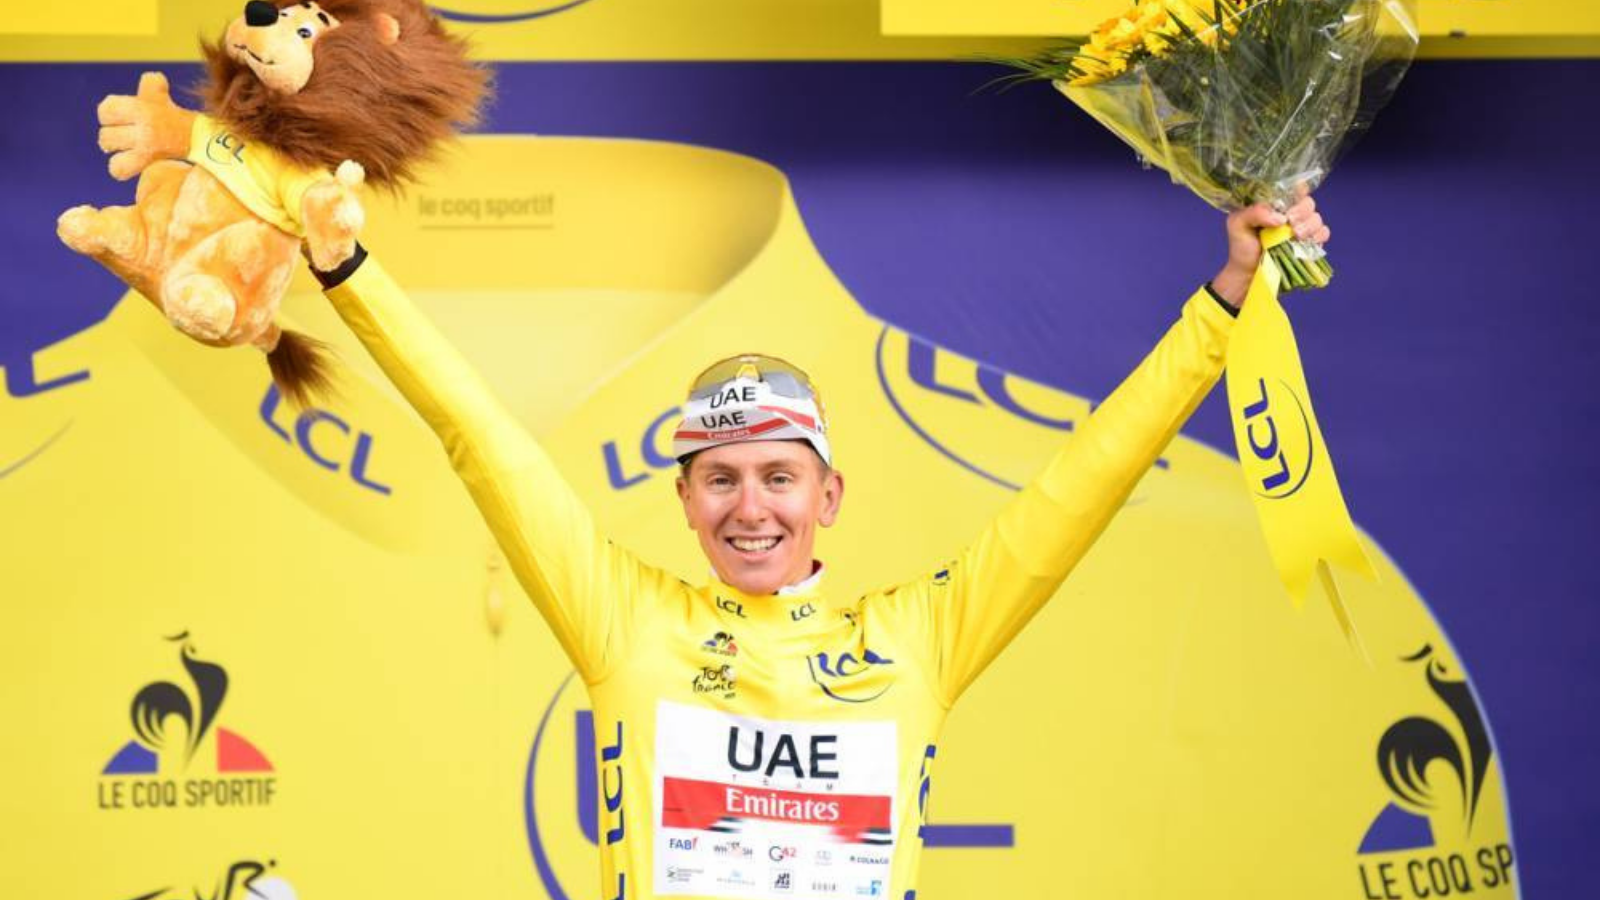 Tadej Pogacar celebrates his yellow jersey at Tour de France 2021